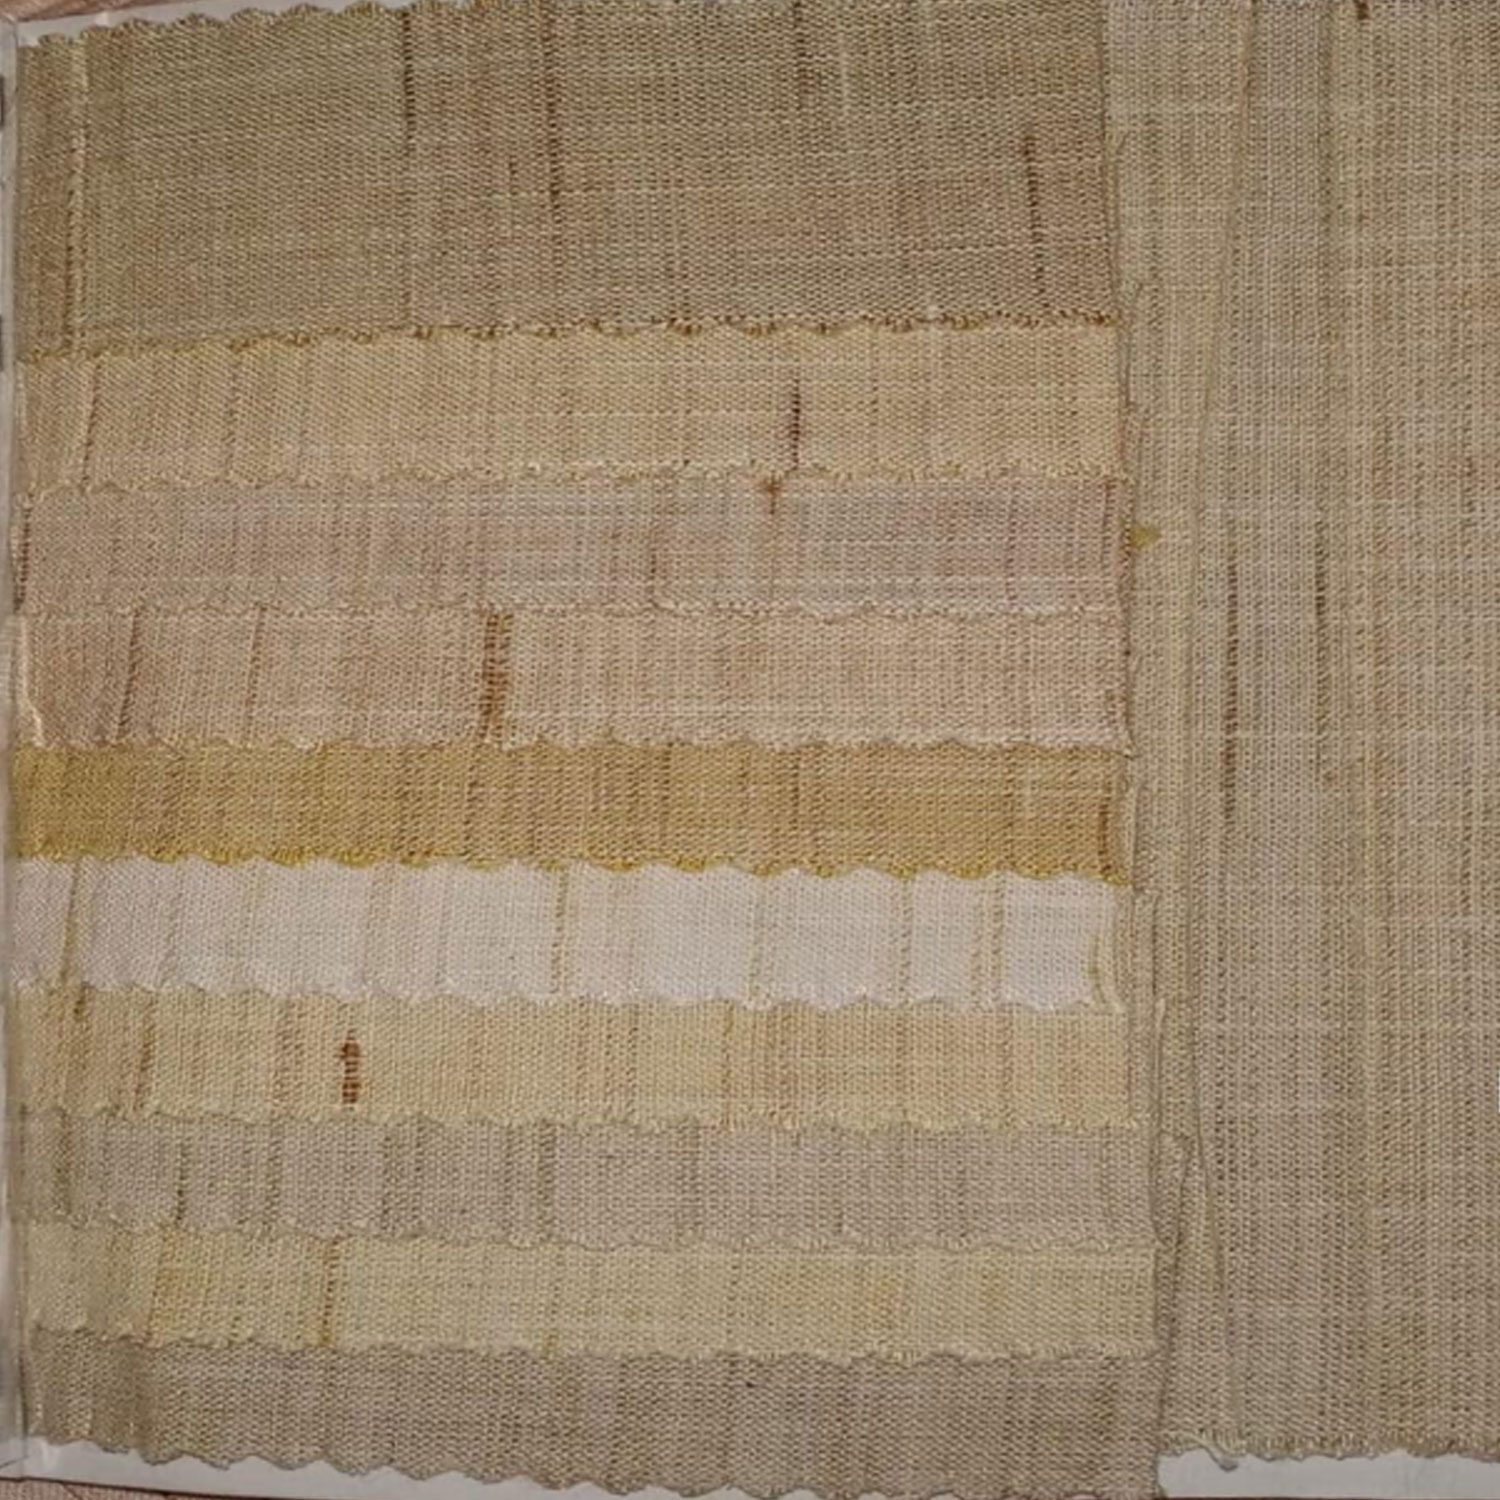 Cotton handloom fabric Banswara | pack of 200 meter